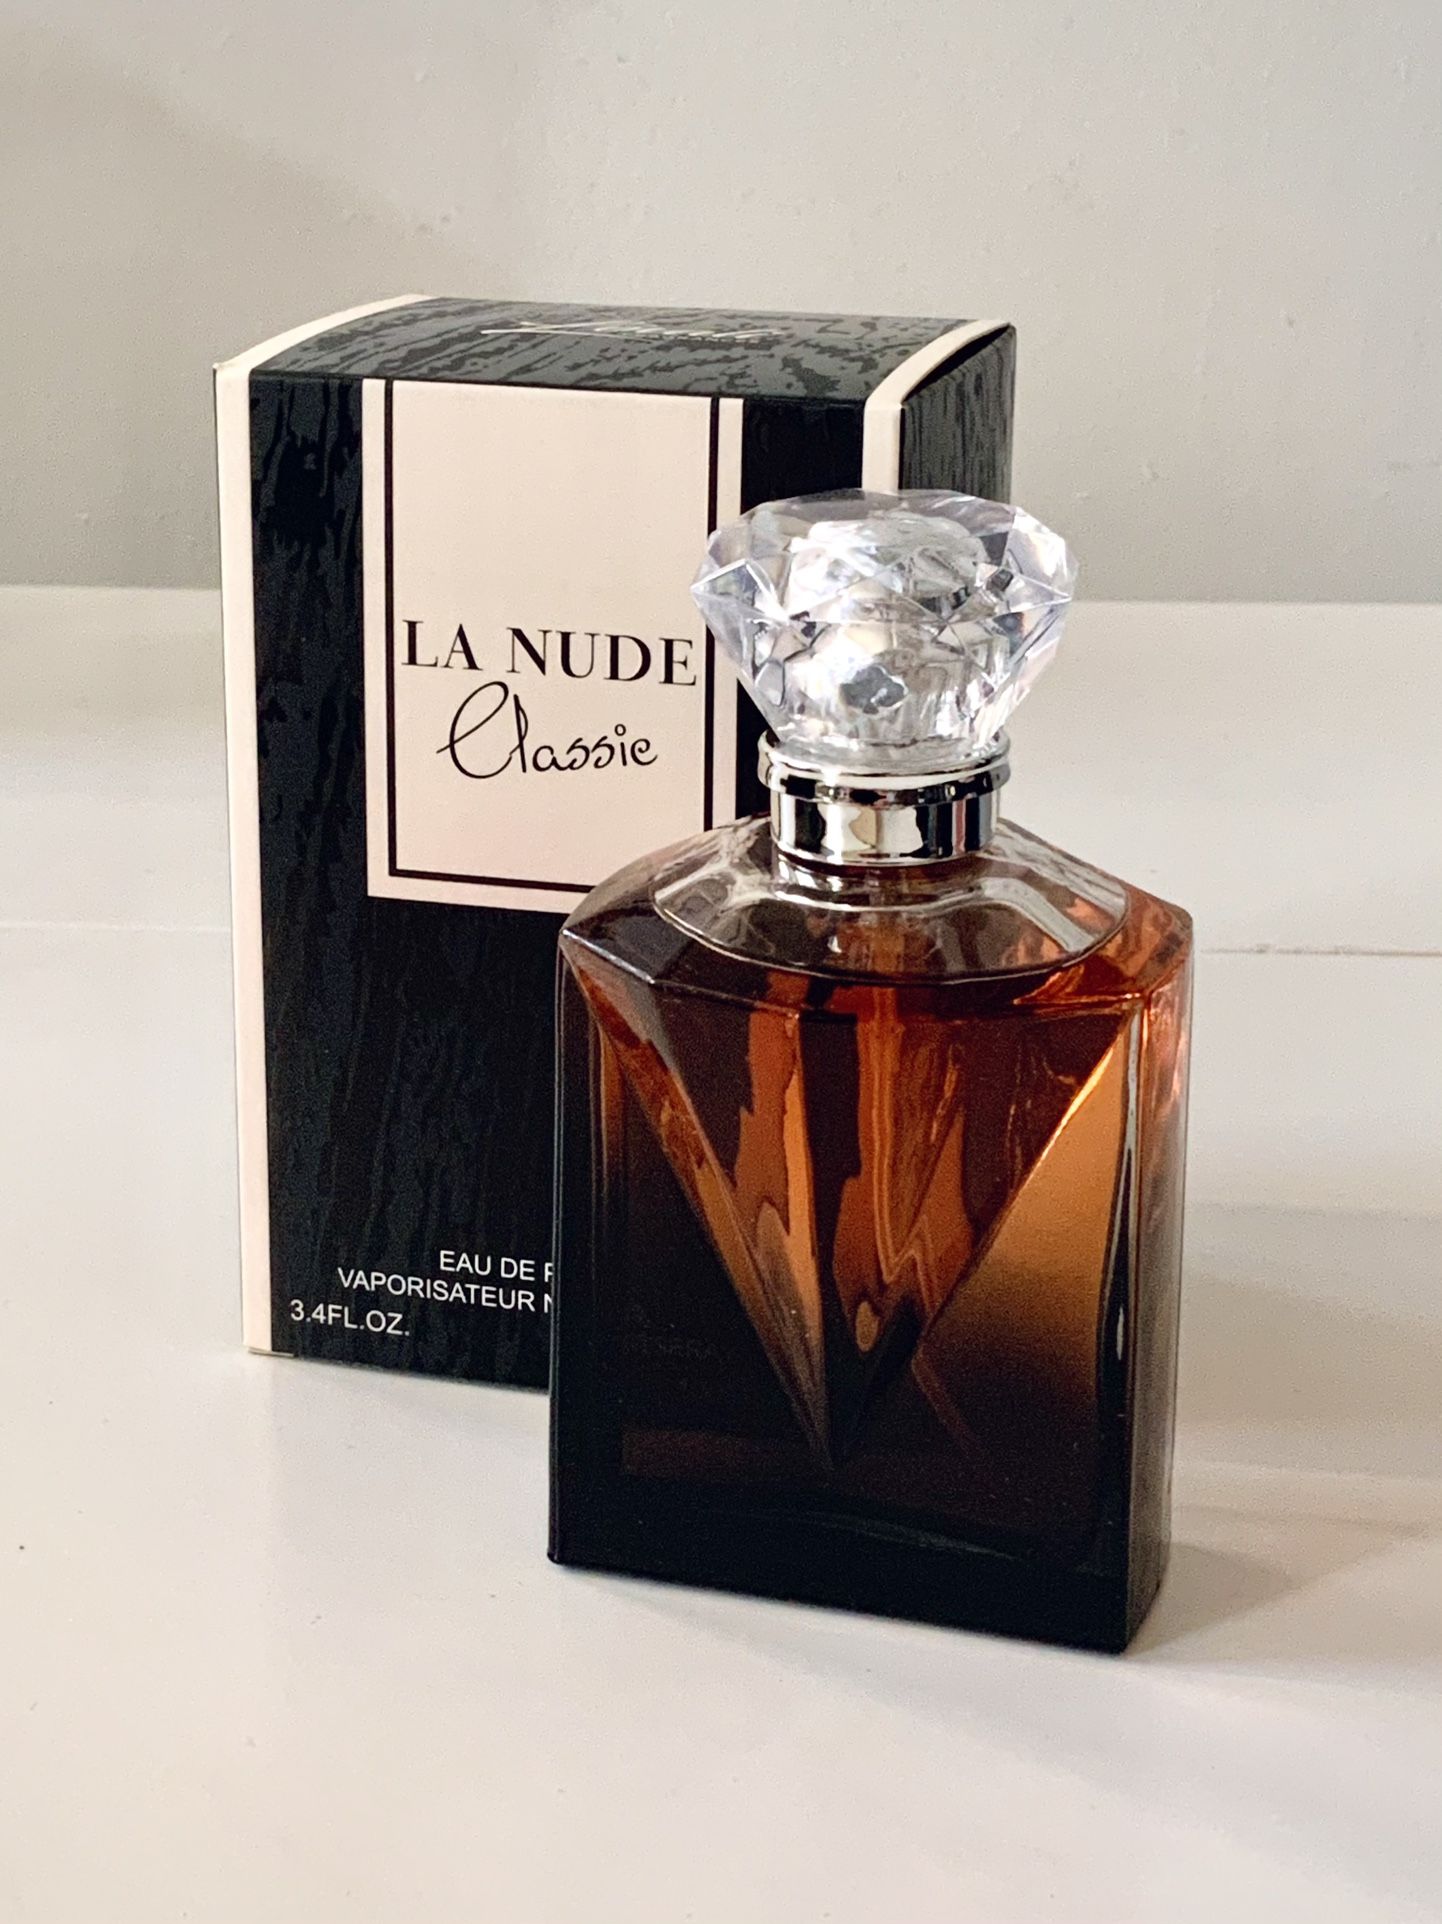 La Nude Classic Perfume